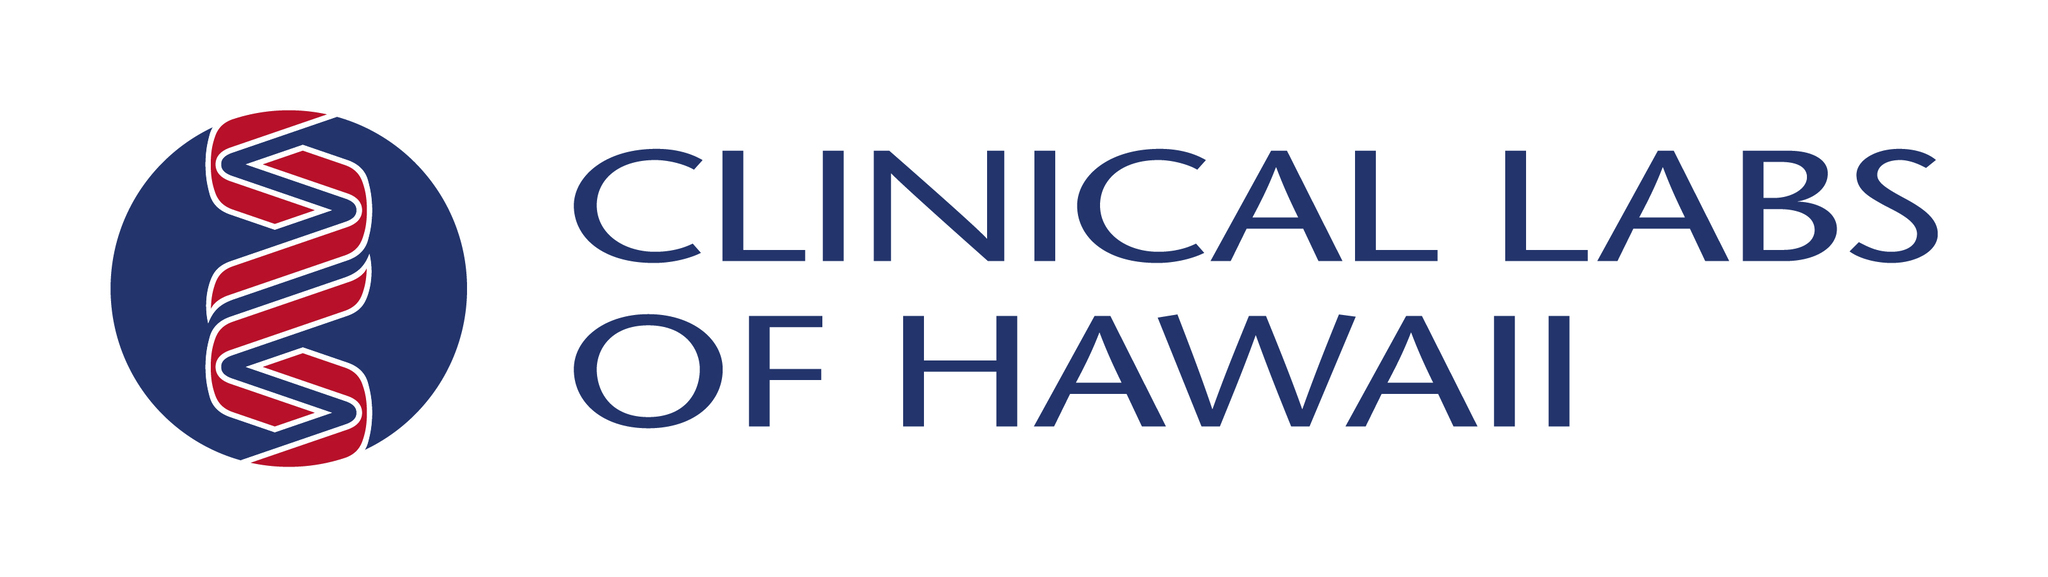 Clinical Lab of Hawaii logo